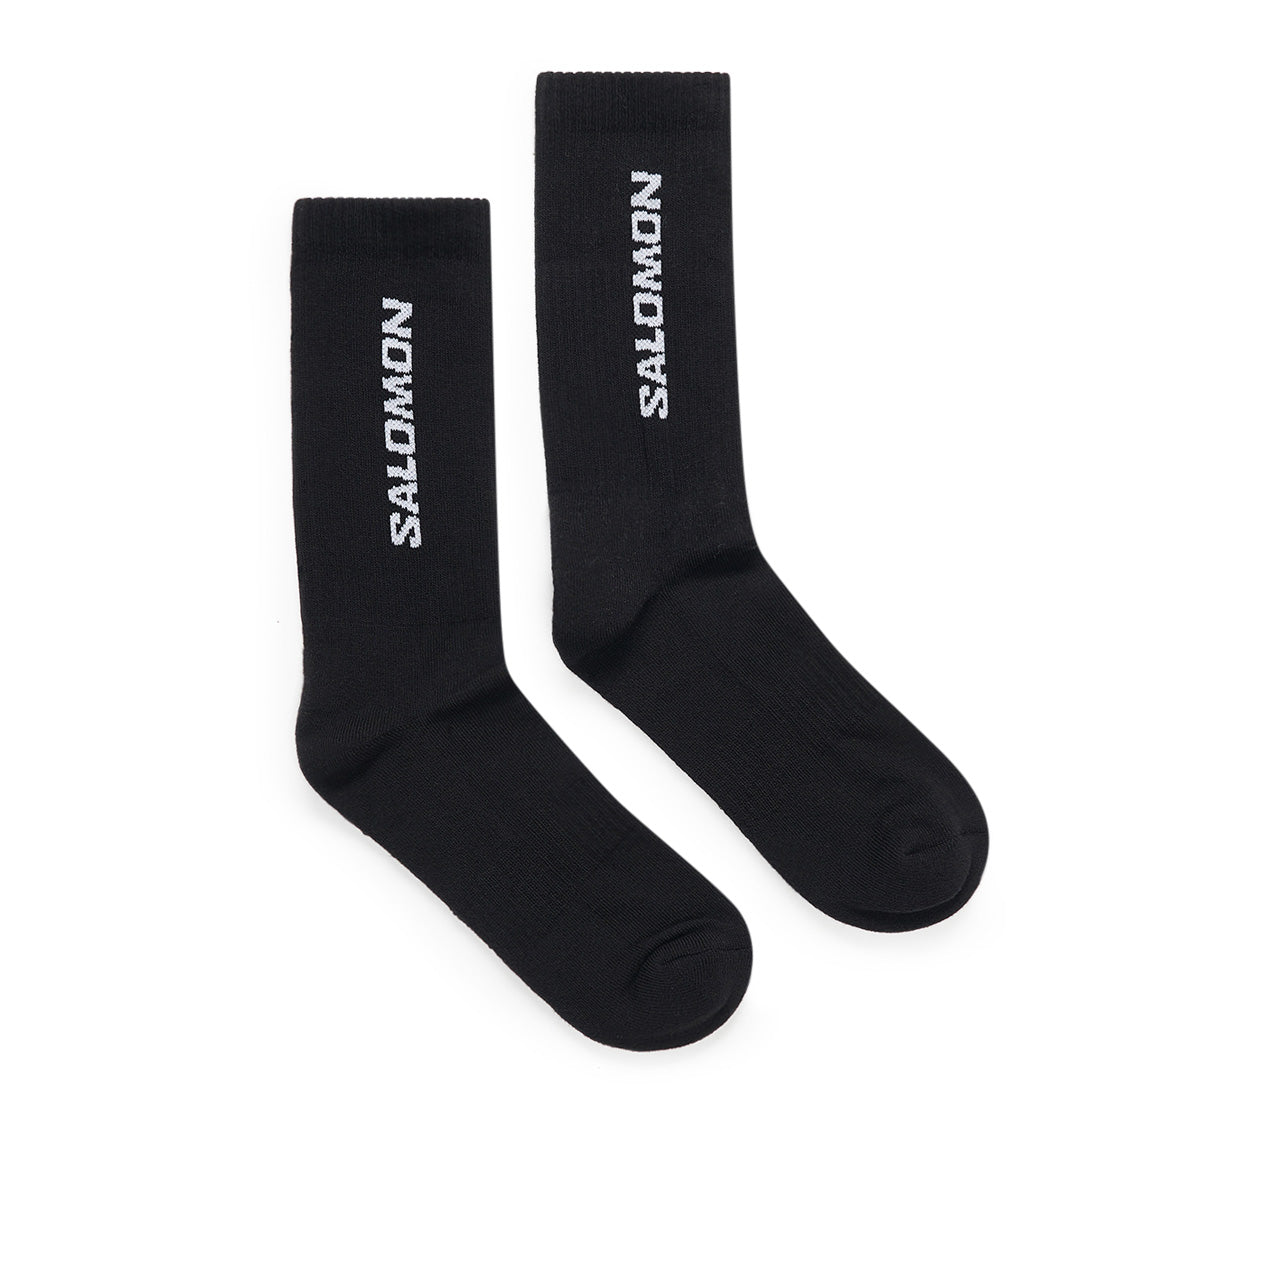 salomon socks everyday crew 3-pack a.plus LC2086100 store (black) 